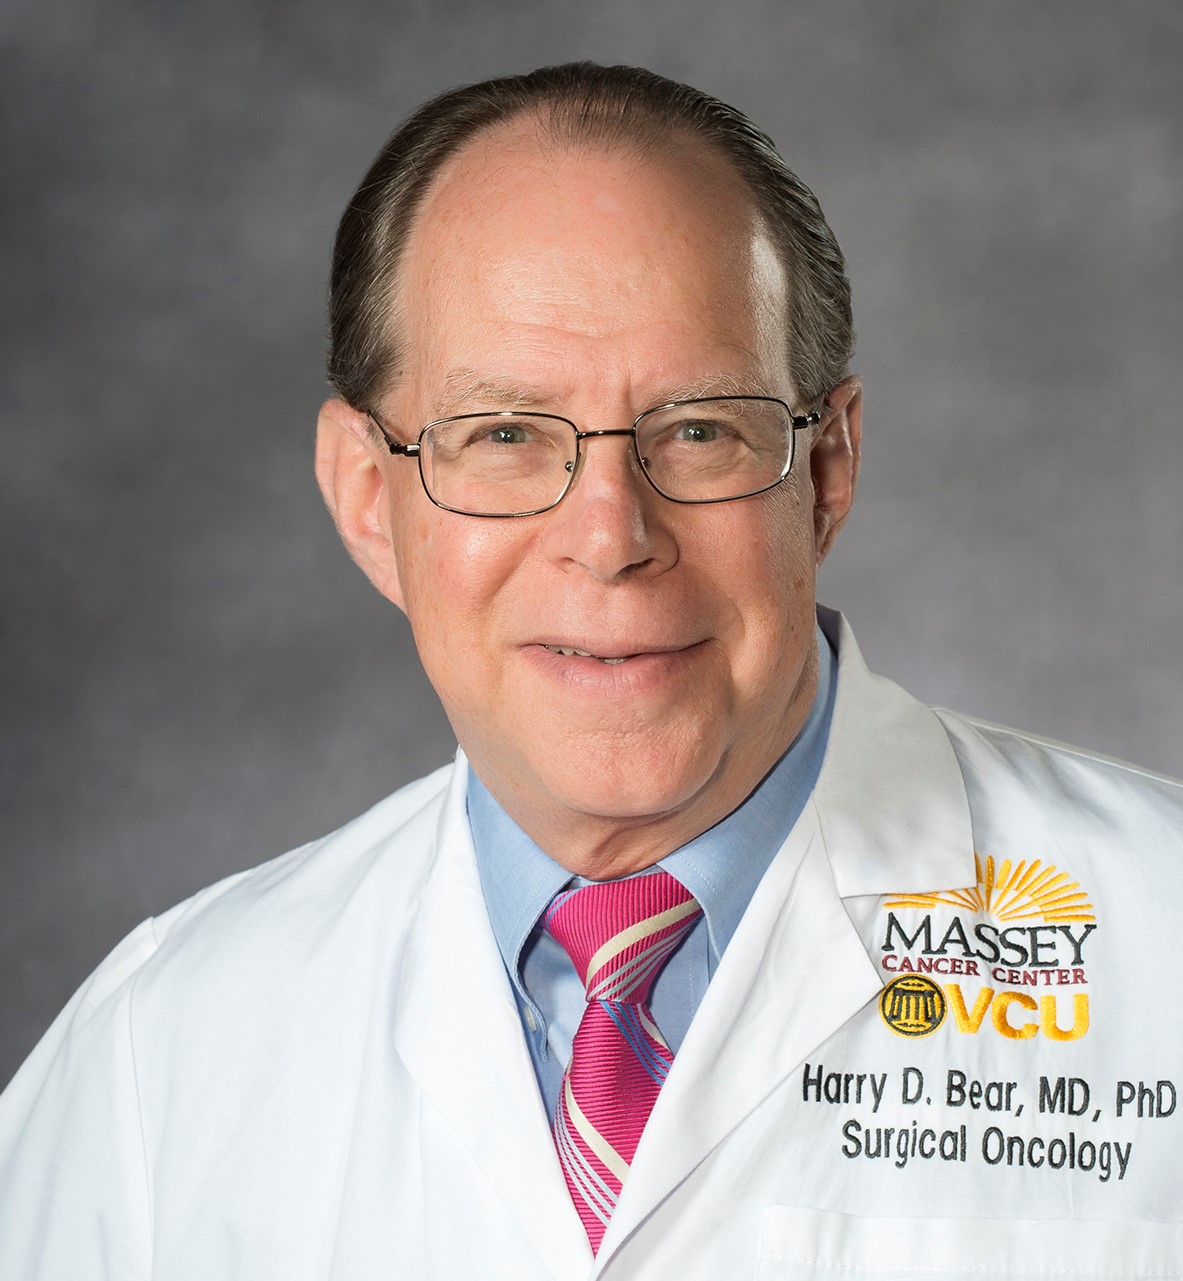 Harry D. Bear, MD, PhD